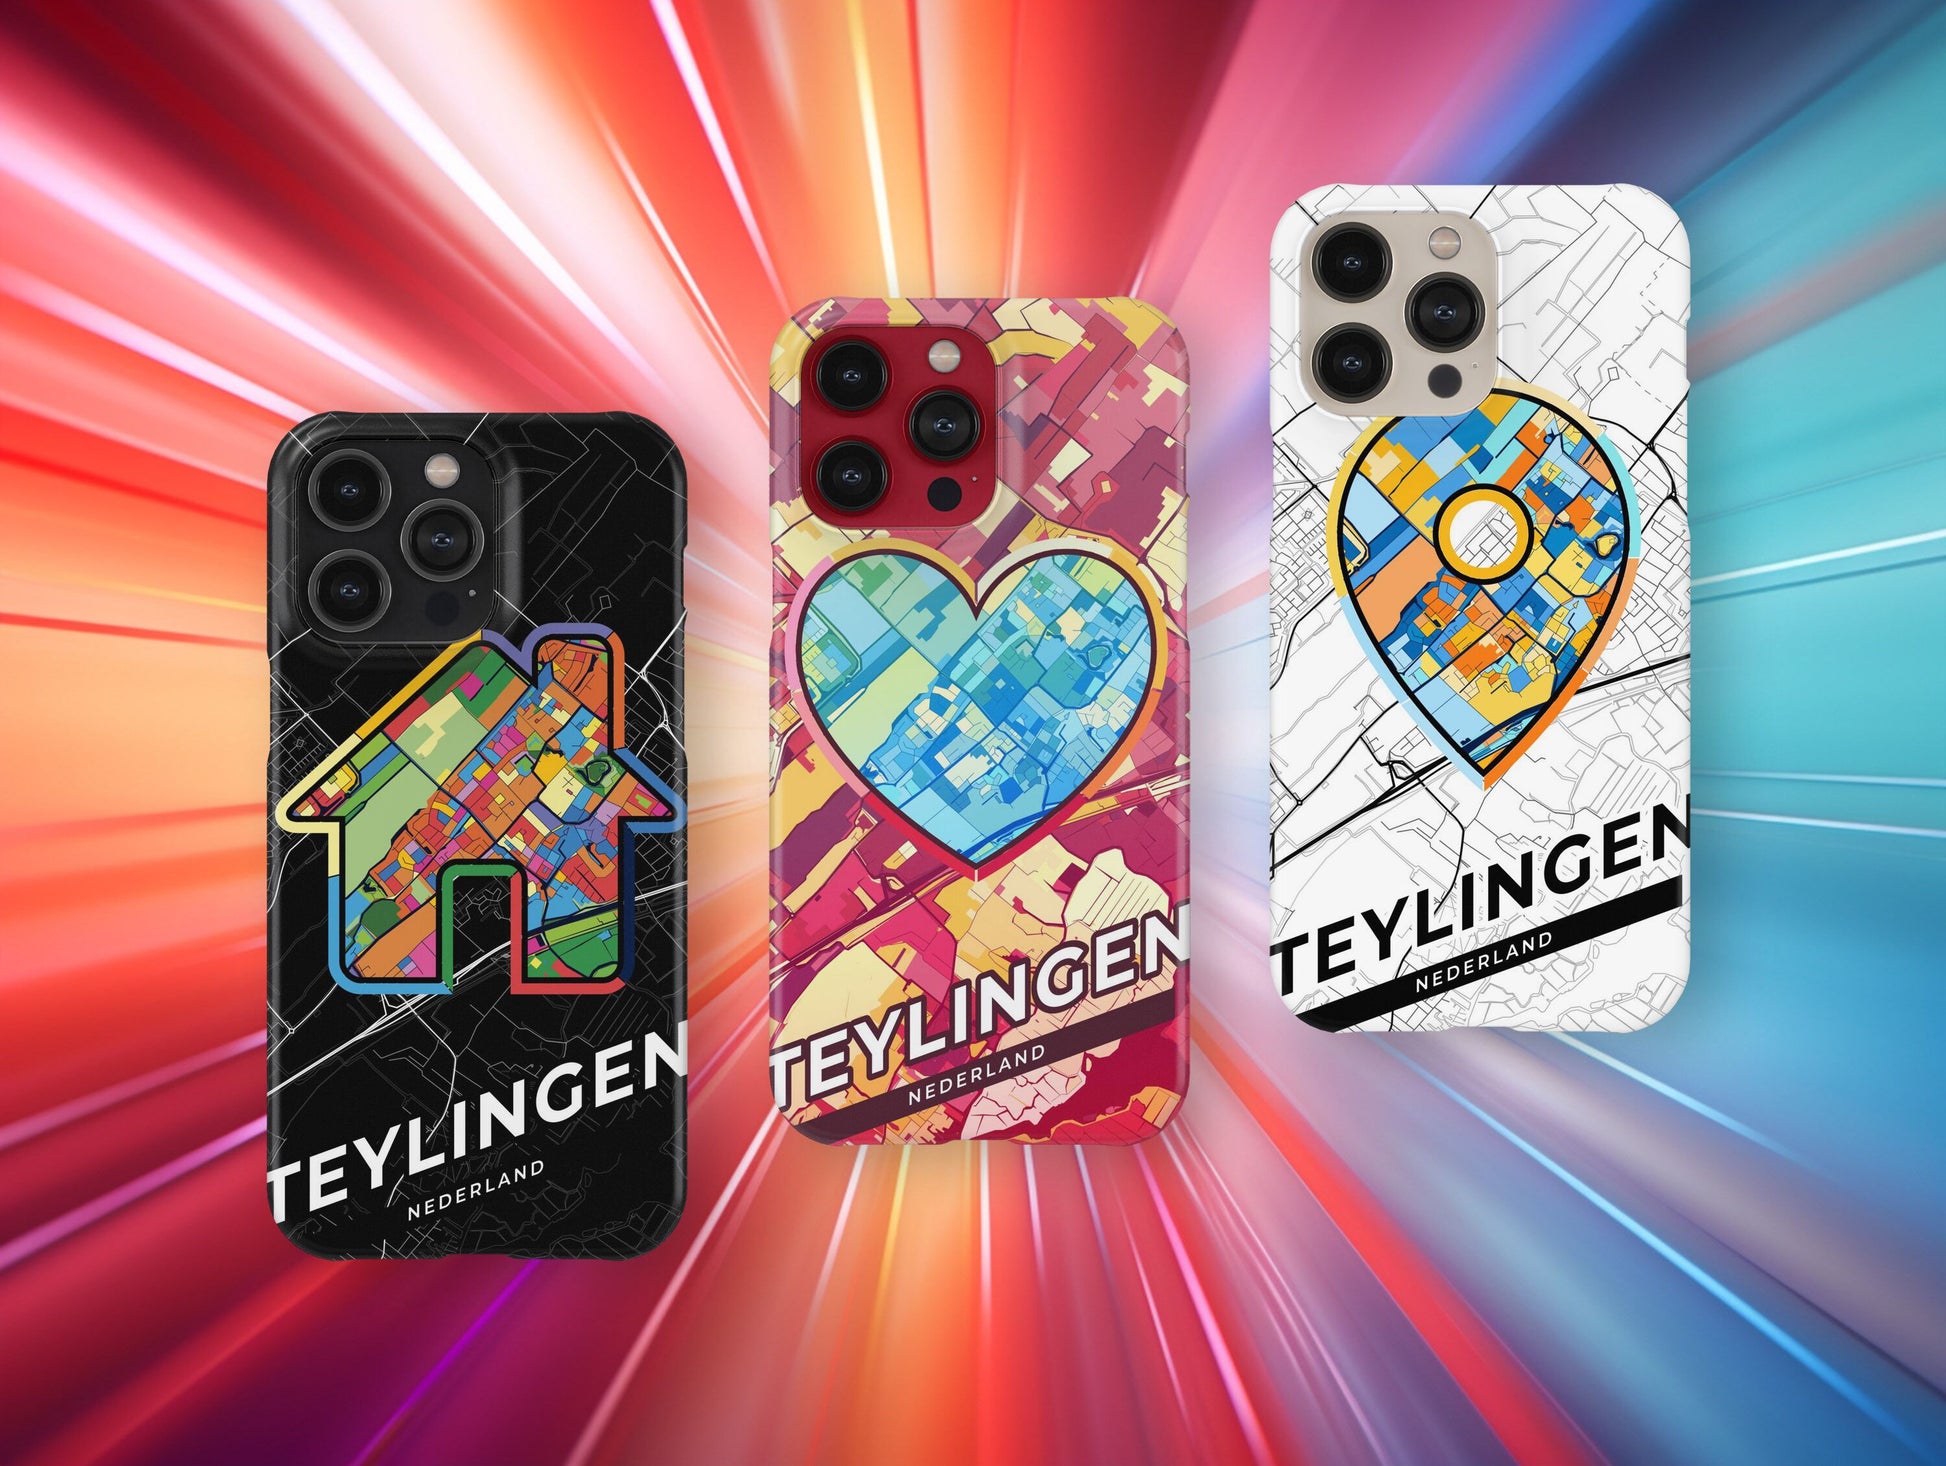 Teylingen Netherlands slim phone case with colorful icon